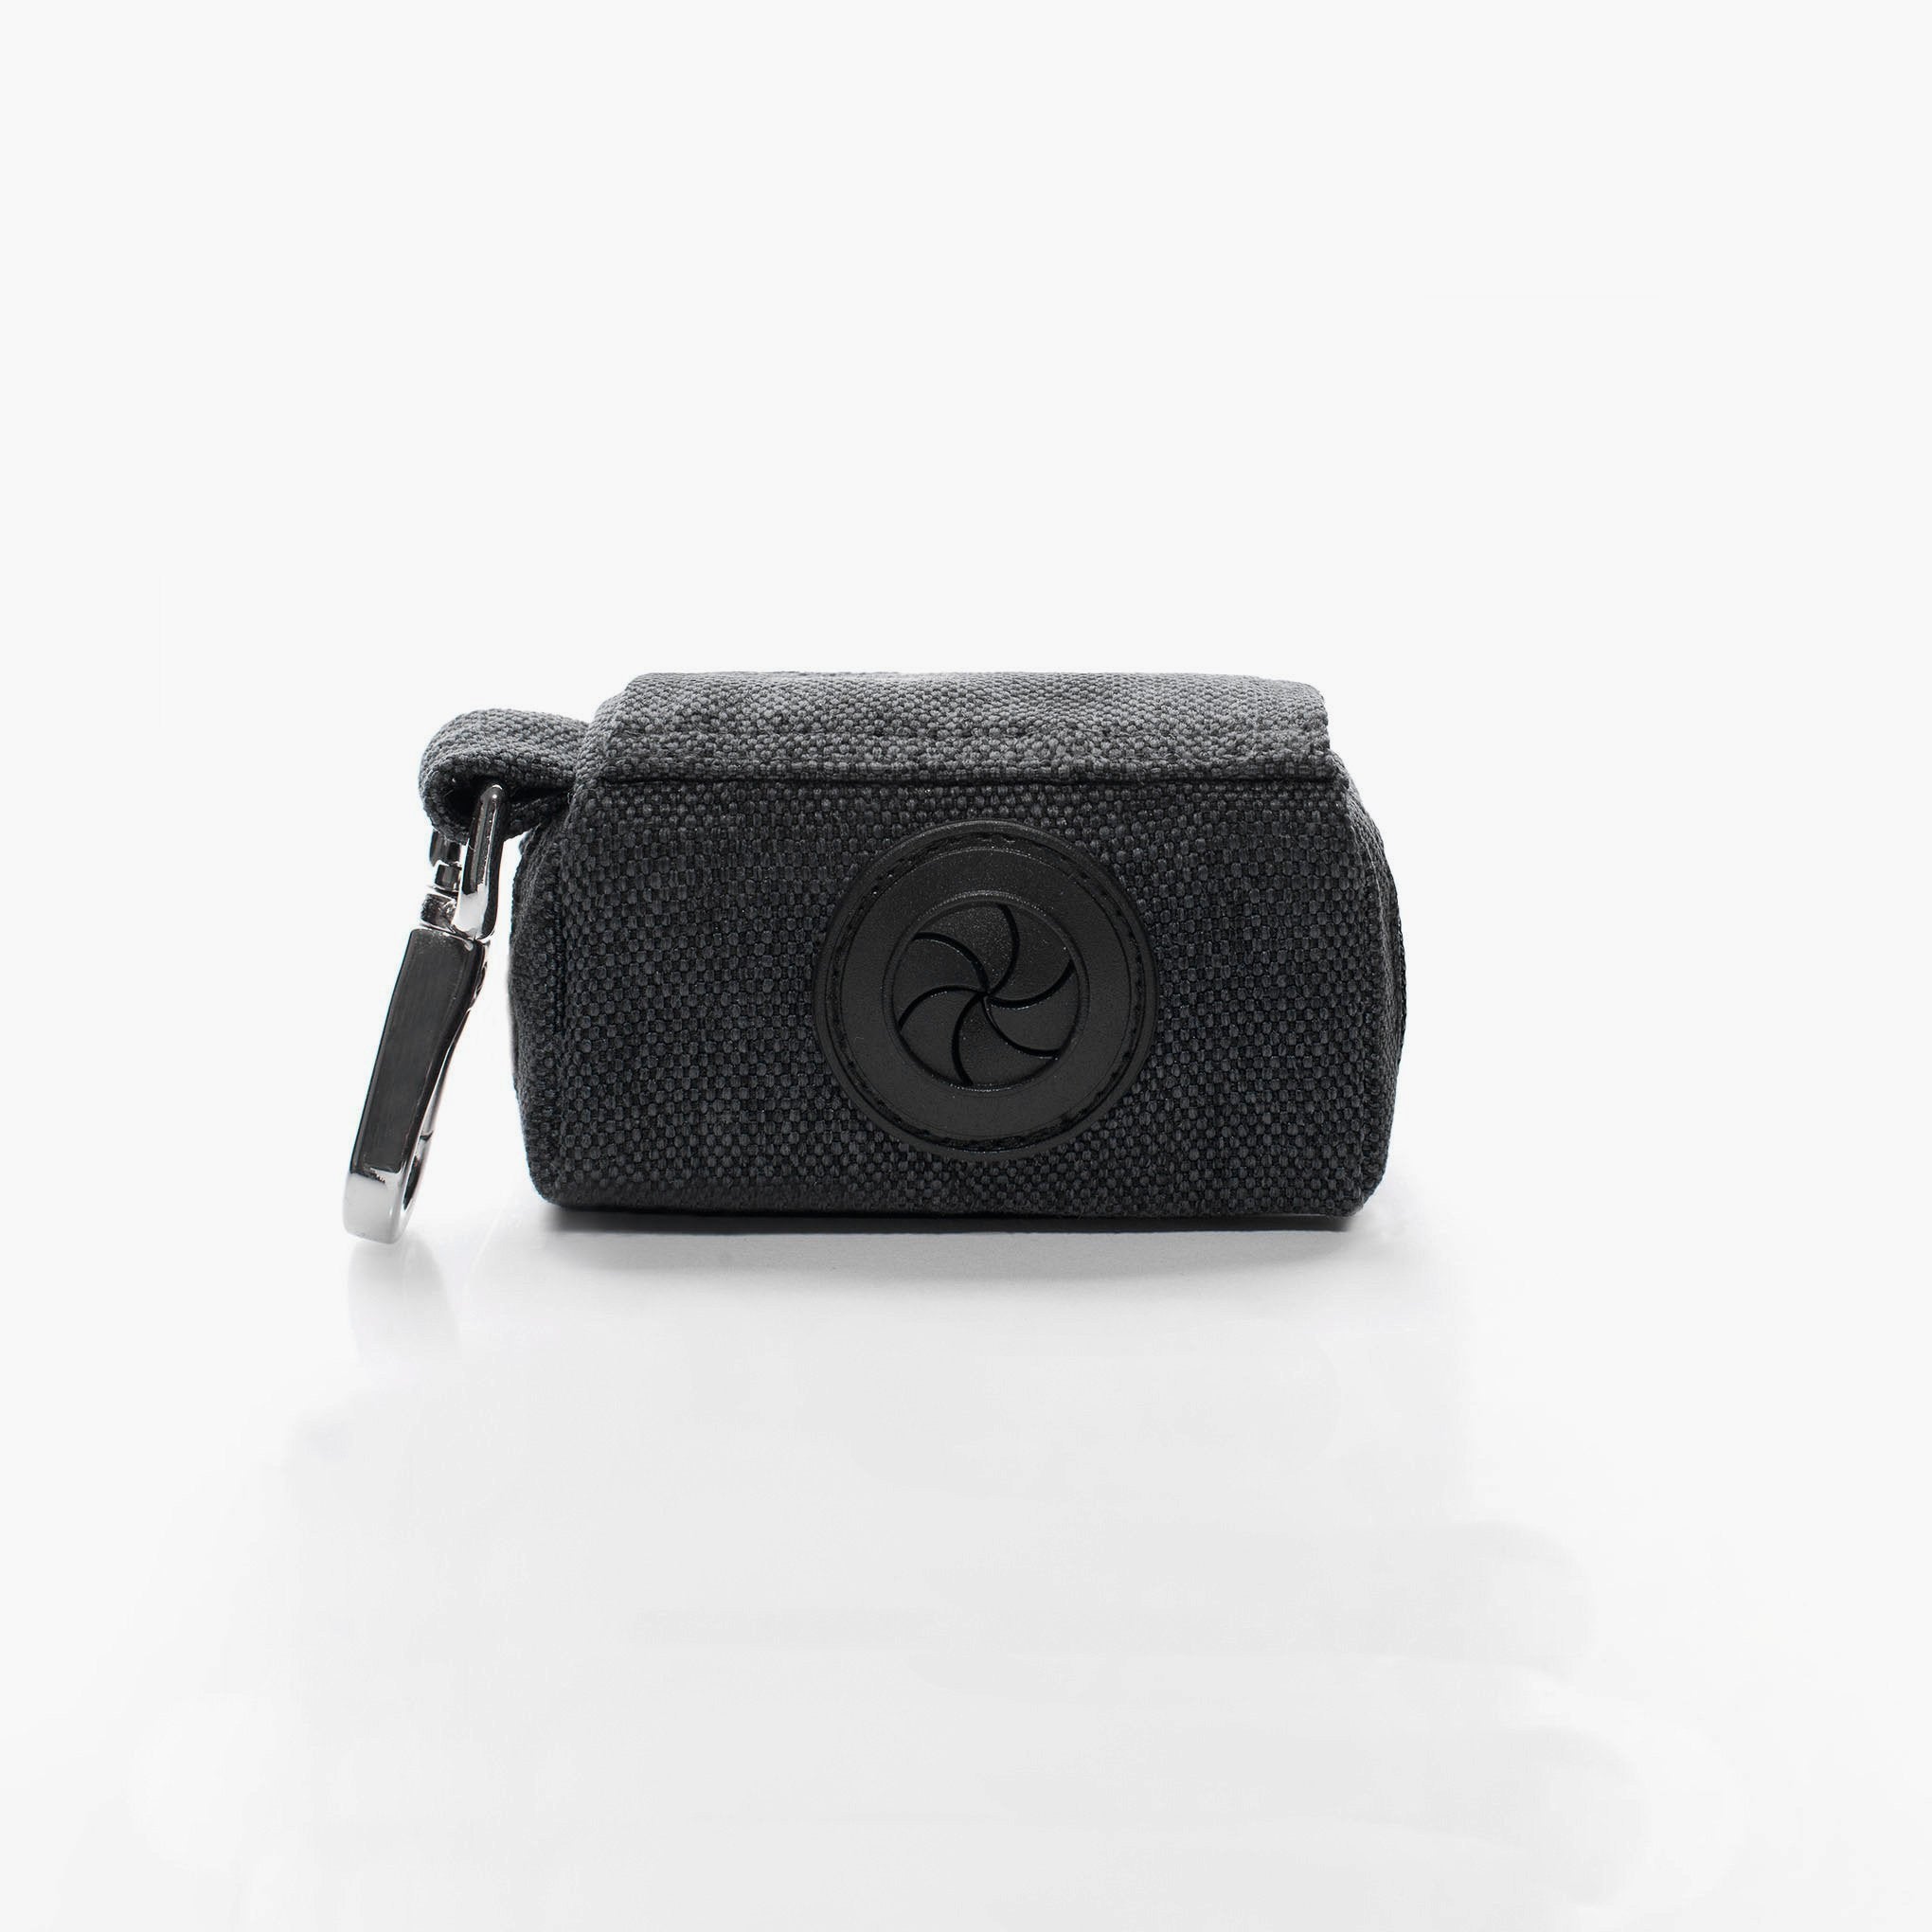 Mini Poop Bag Holder - Black - NEW PETS ON THE BLOCK.COM